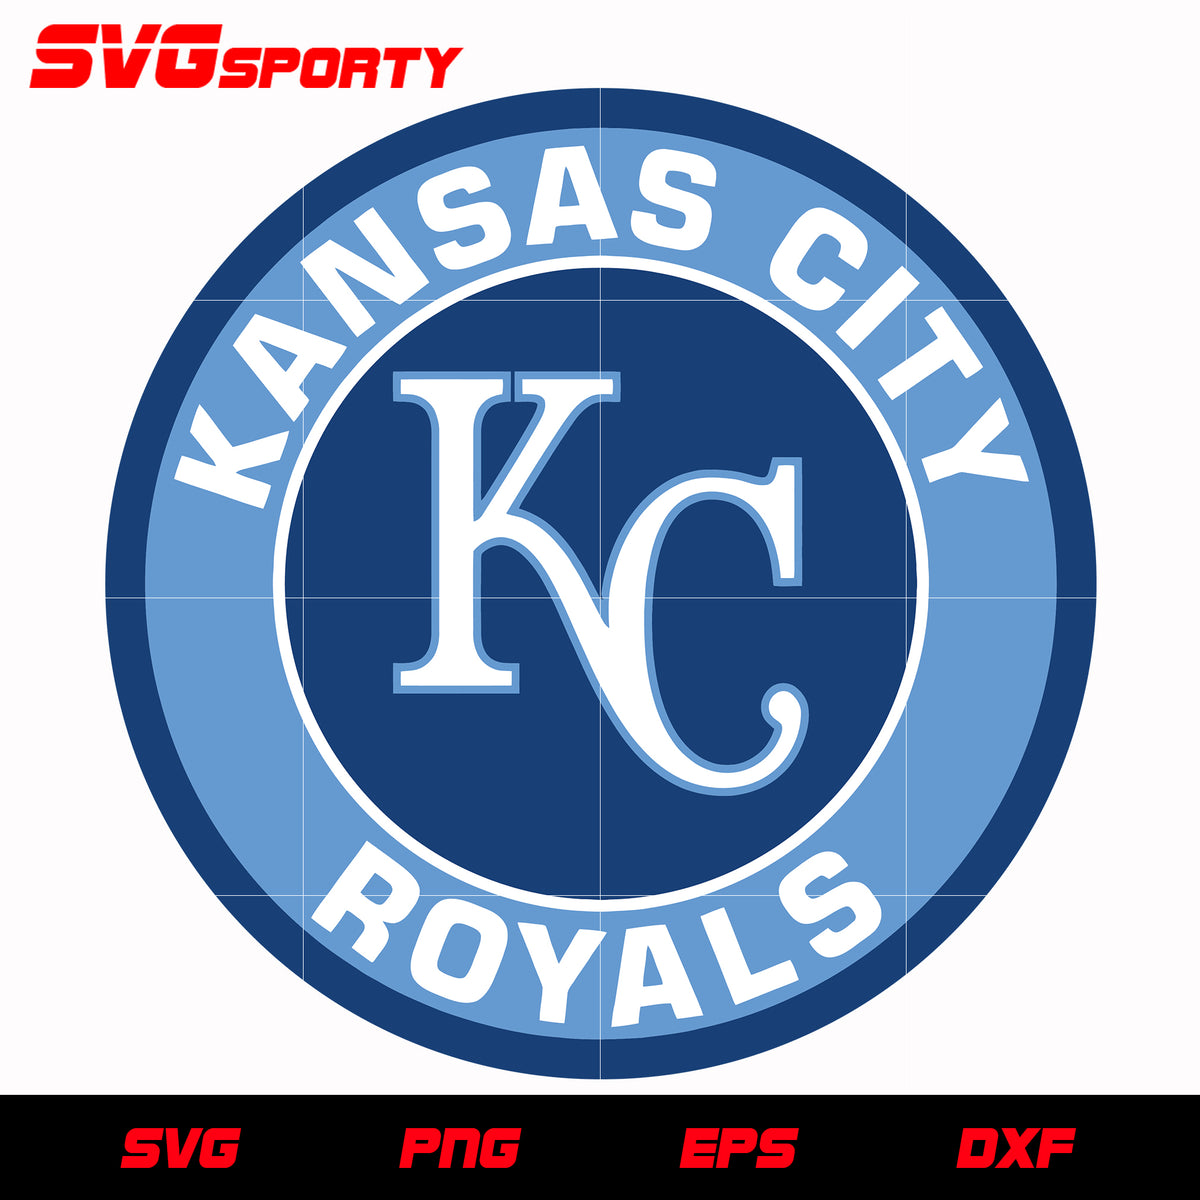 MLB Logo Kansas City Royals, Kansas City Royals SVG, Vector Kansas